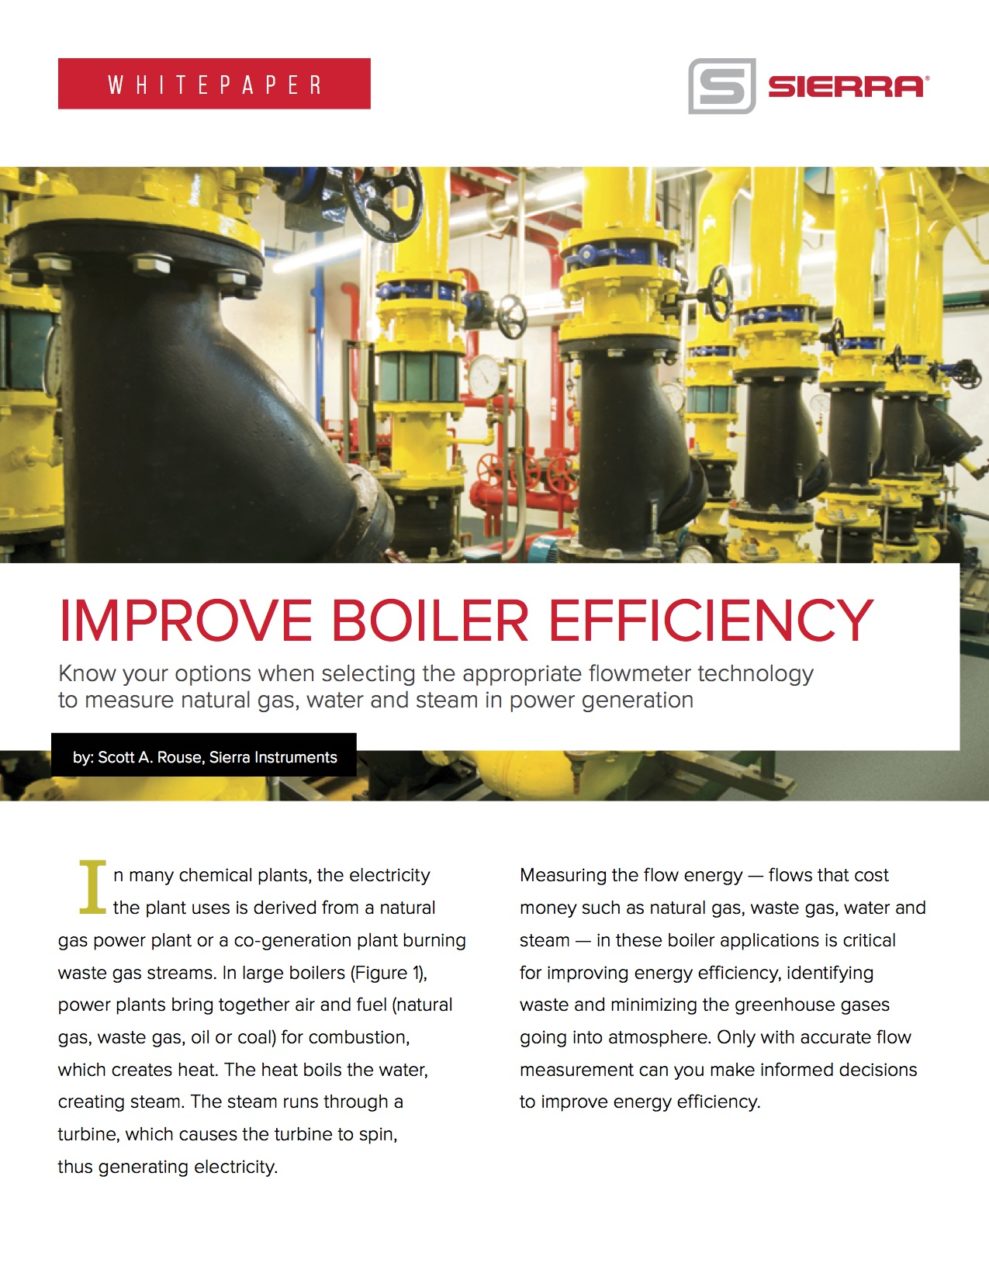 Improve Boiler Efficiency